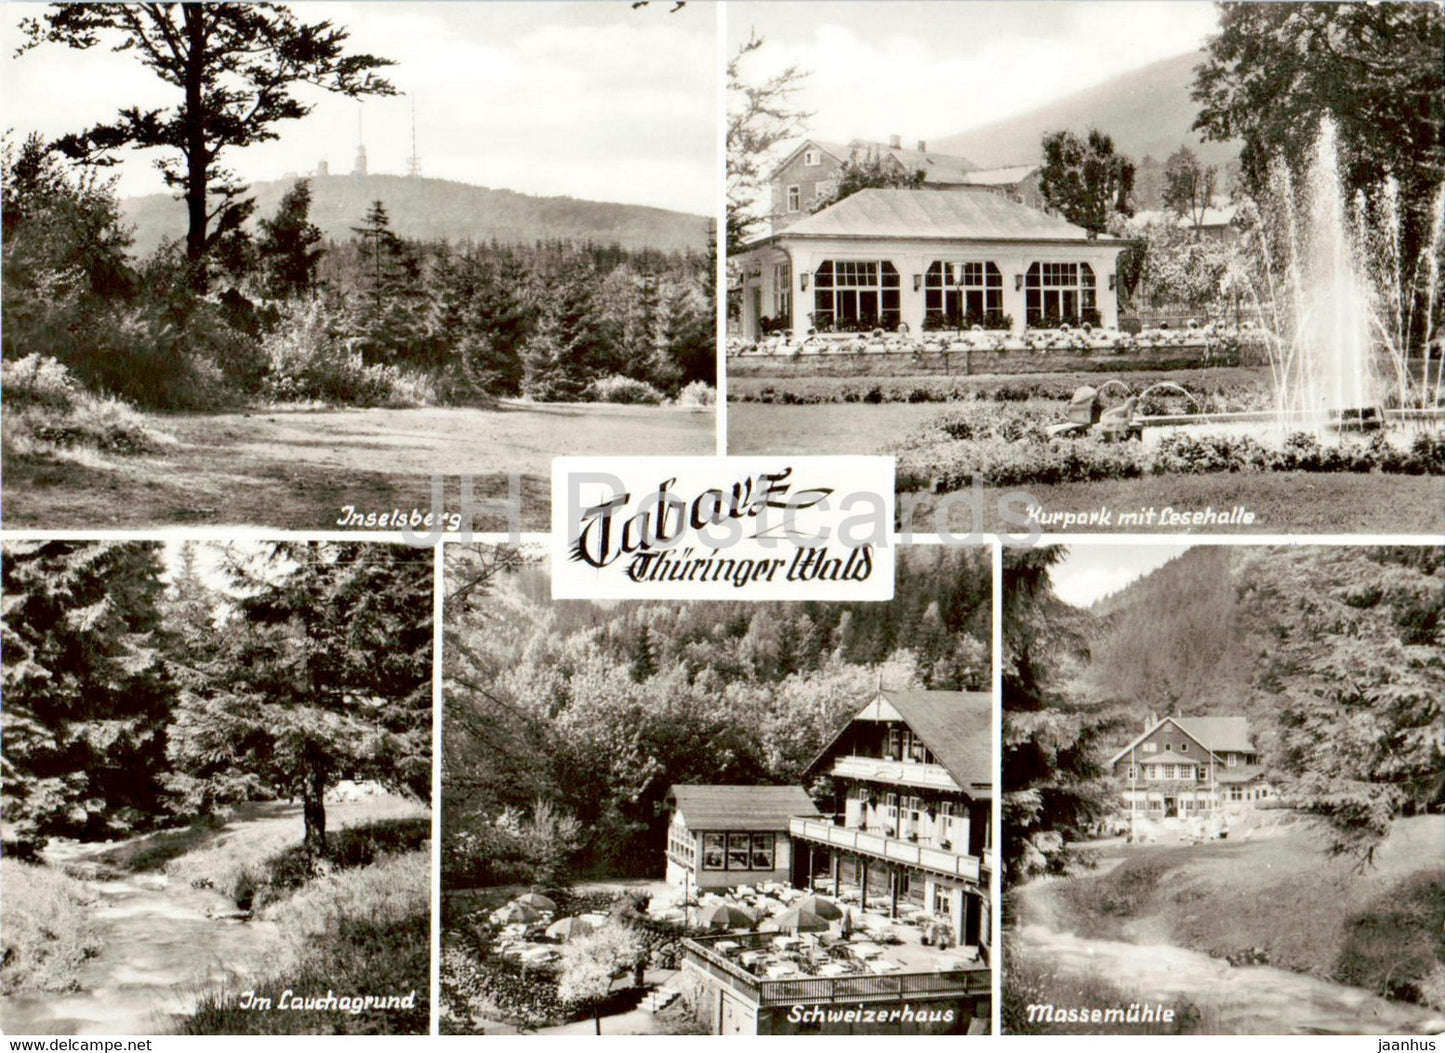 Tabarz - Thuringer Wald - Inselsberg - Kurpark mit Lesehalle - Schweizerhaus - Massemuhle - Germany DDR - unused - JH Postcards